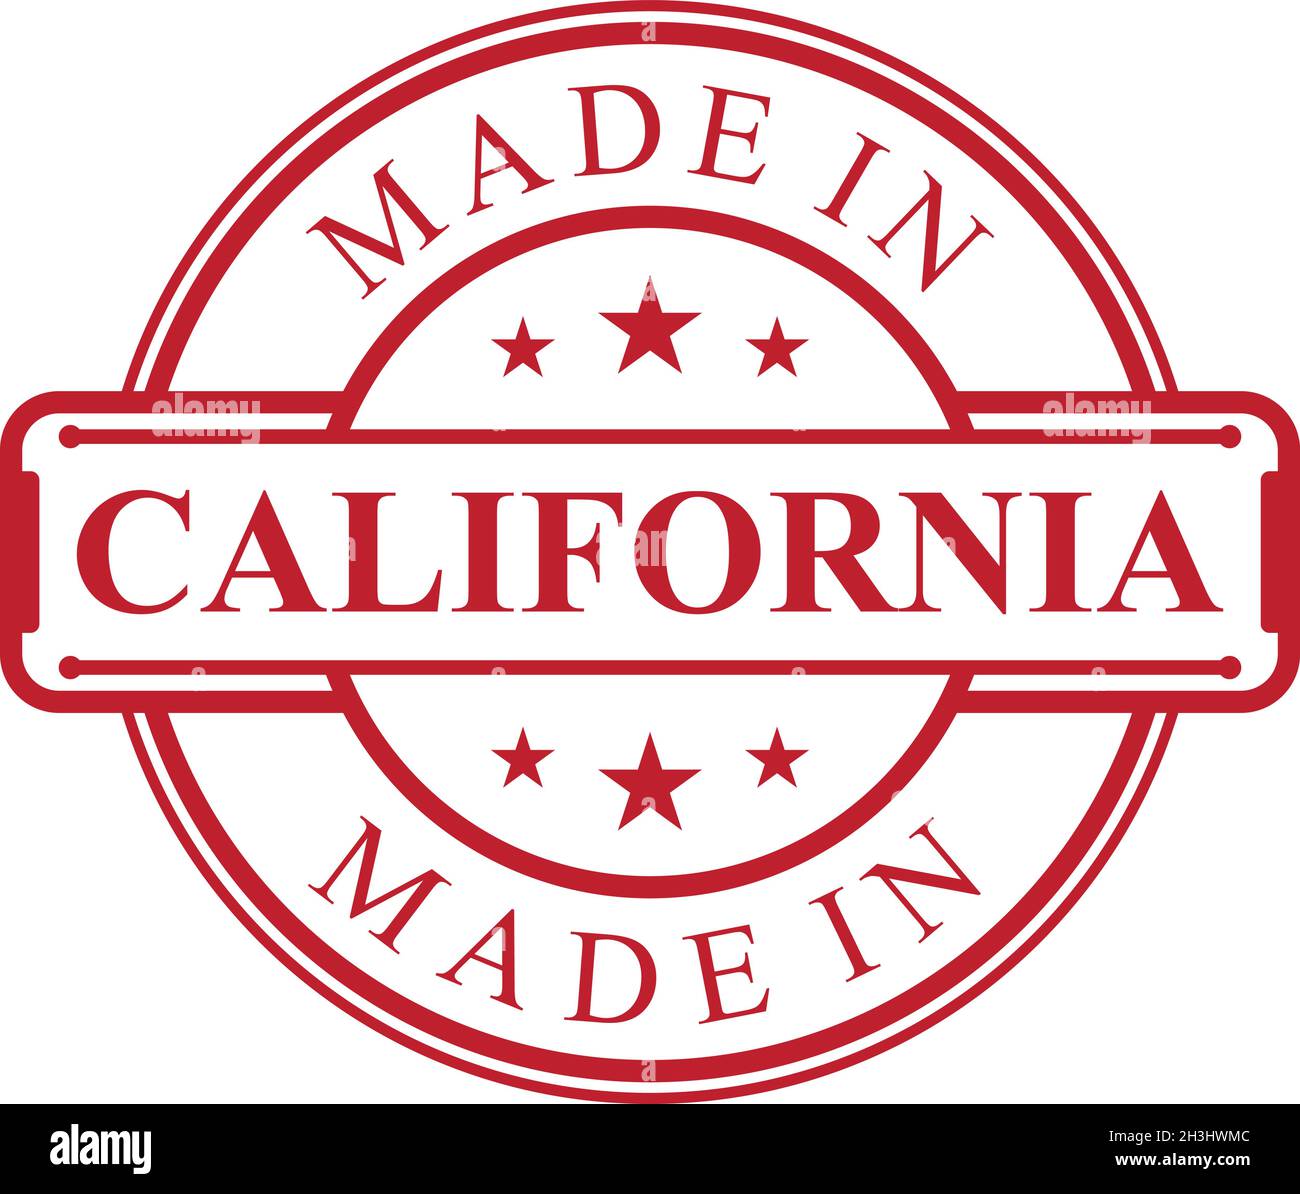 Made in California Label Icon mit rotem Farbemblem auf weißem Hintergrund. Vektor-Qualität Logo Emblem Design-Element. Vektorgrafik EPS.8 EPS. Stock Vektor